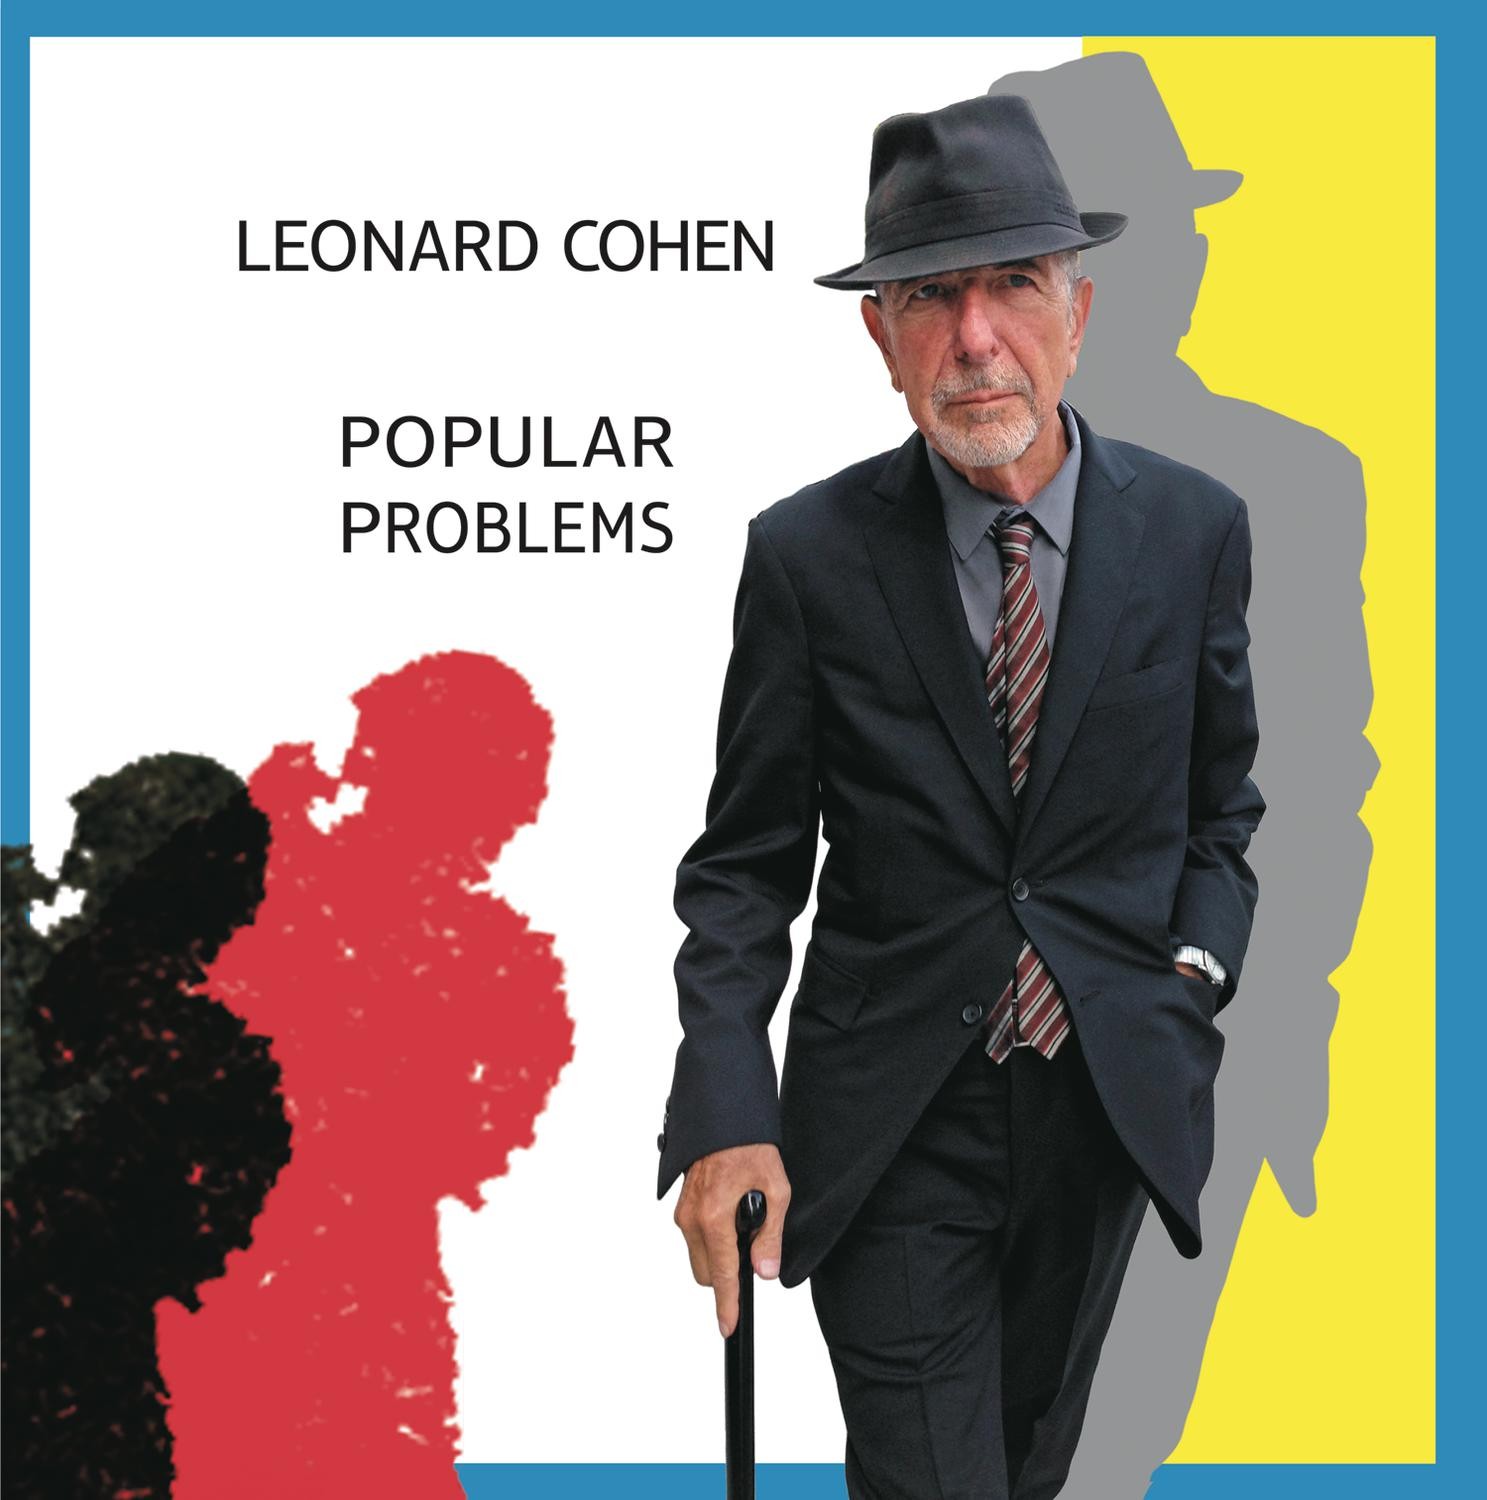 Leonard Cohen - Popular Problems LP